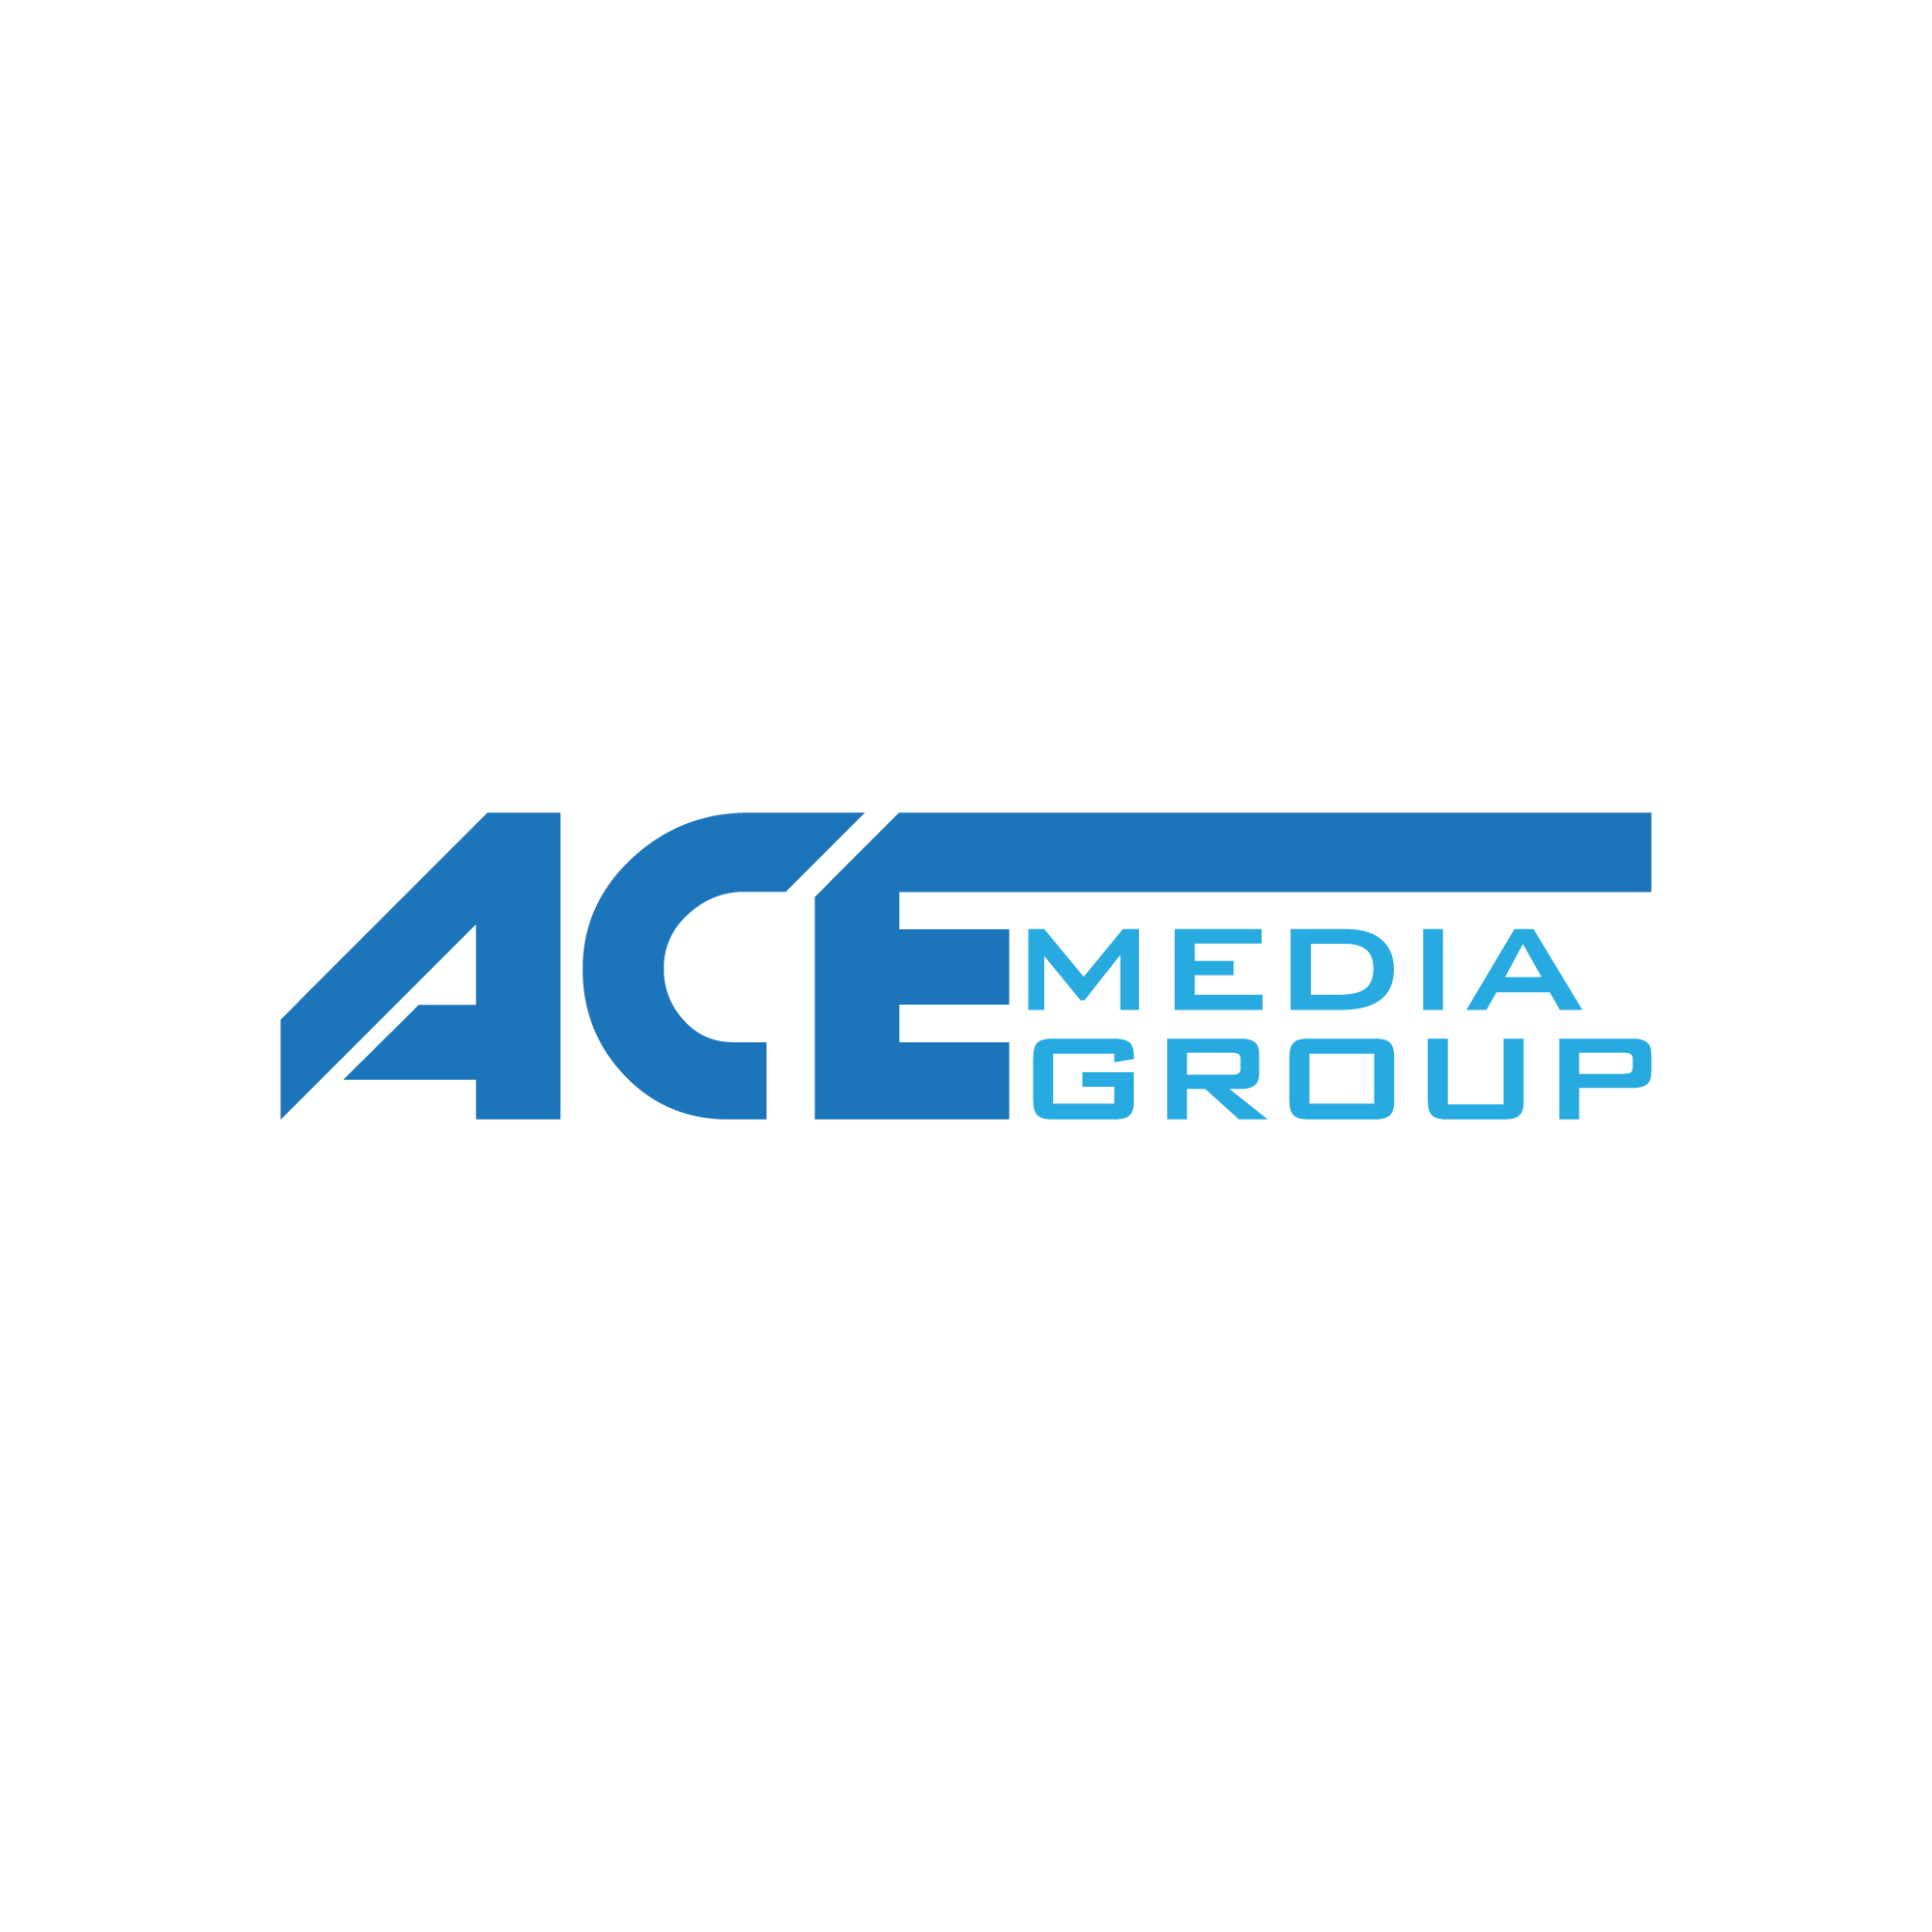 Ace-mediagroup.com